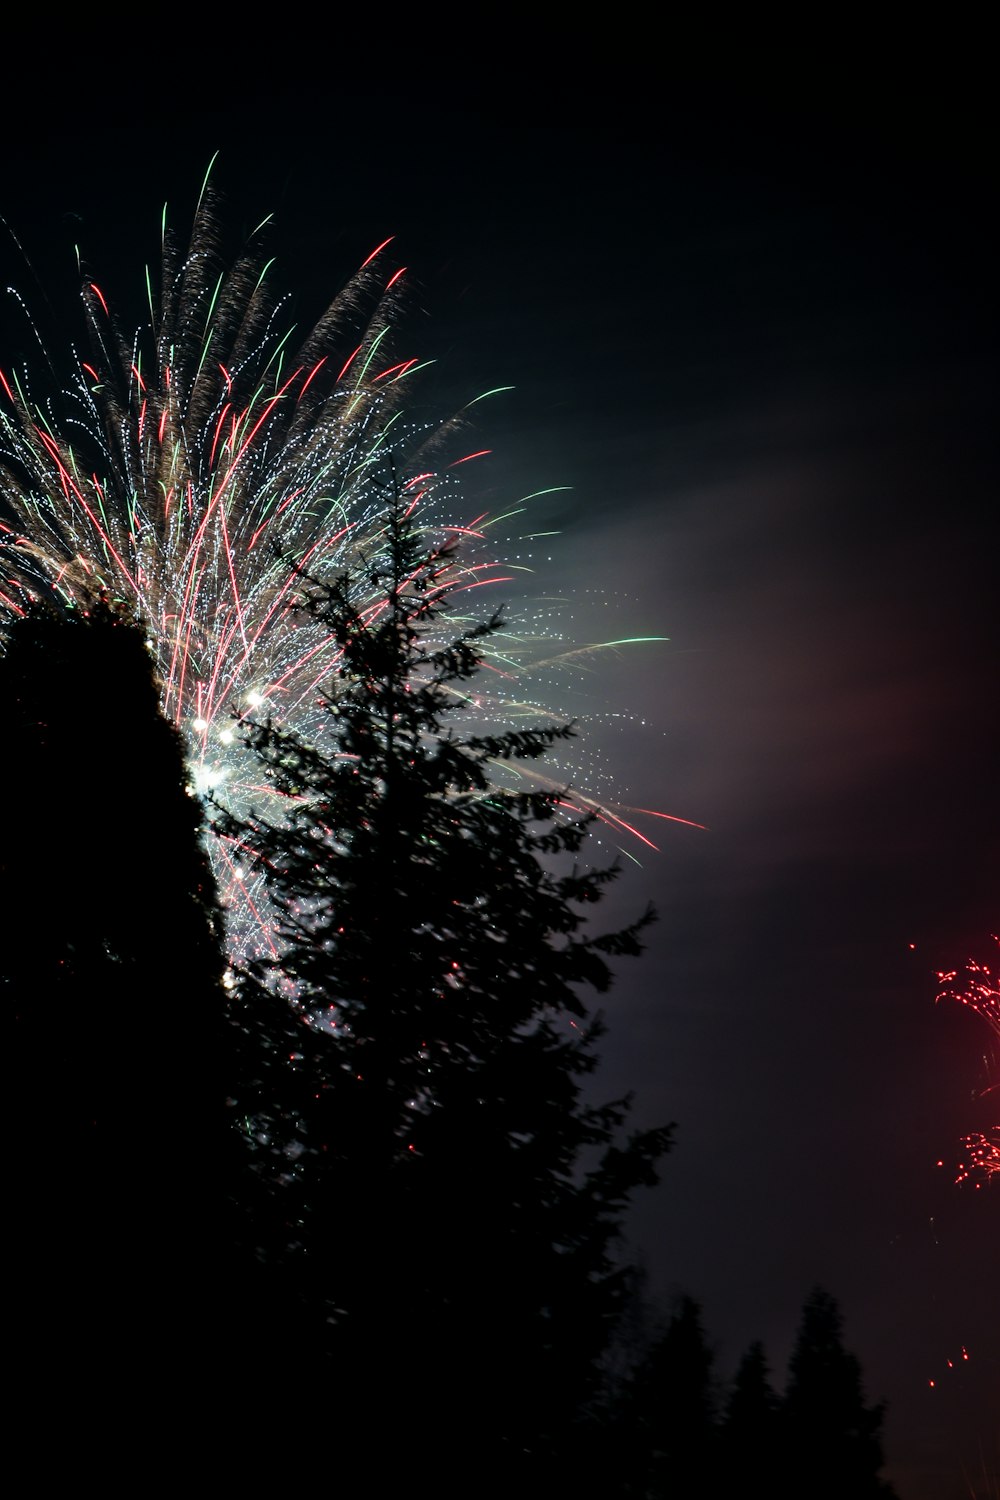 trees under fireworks